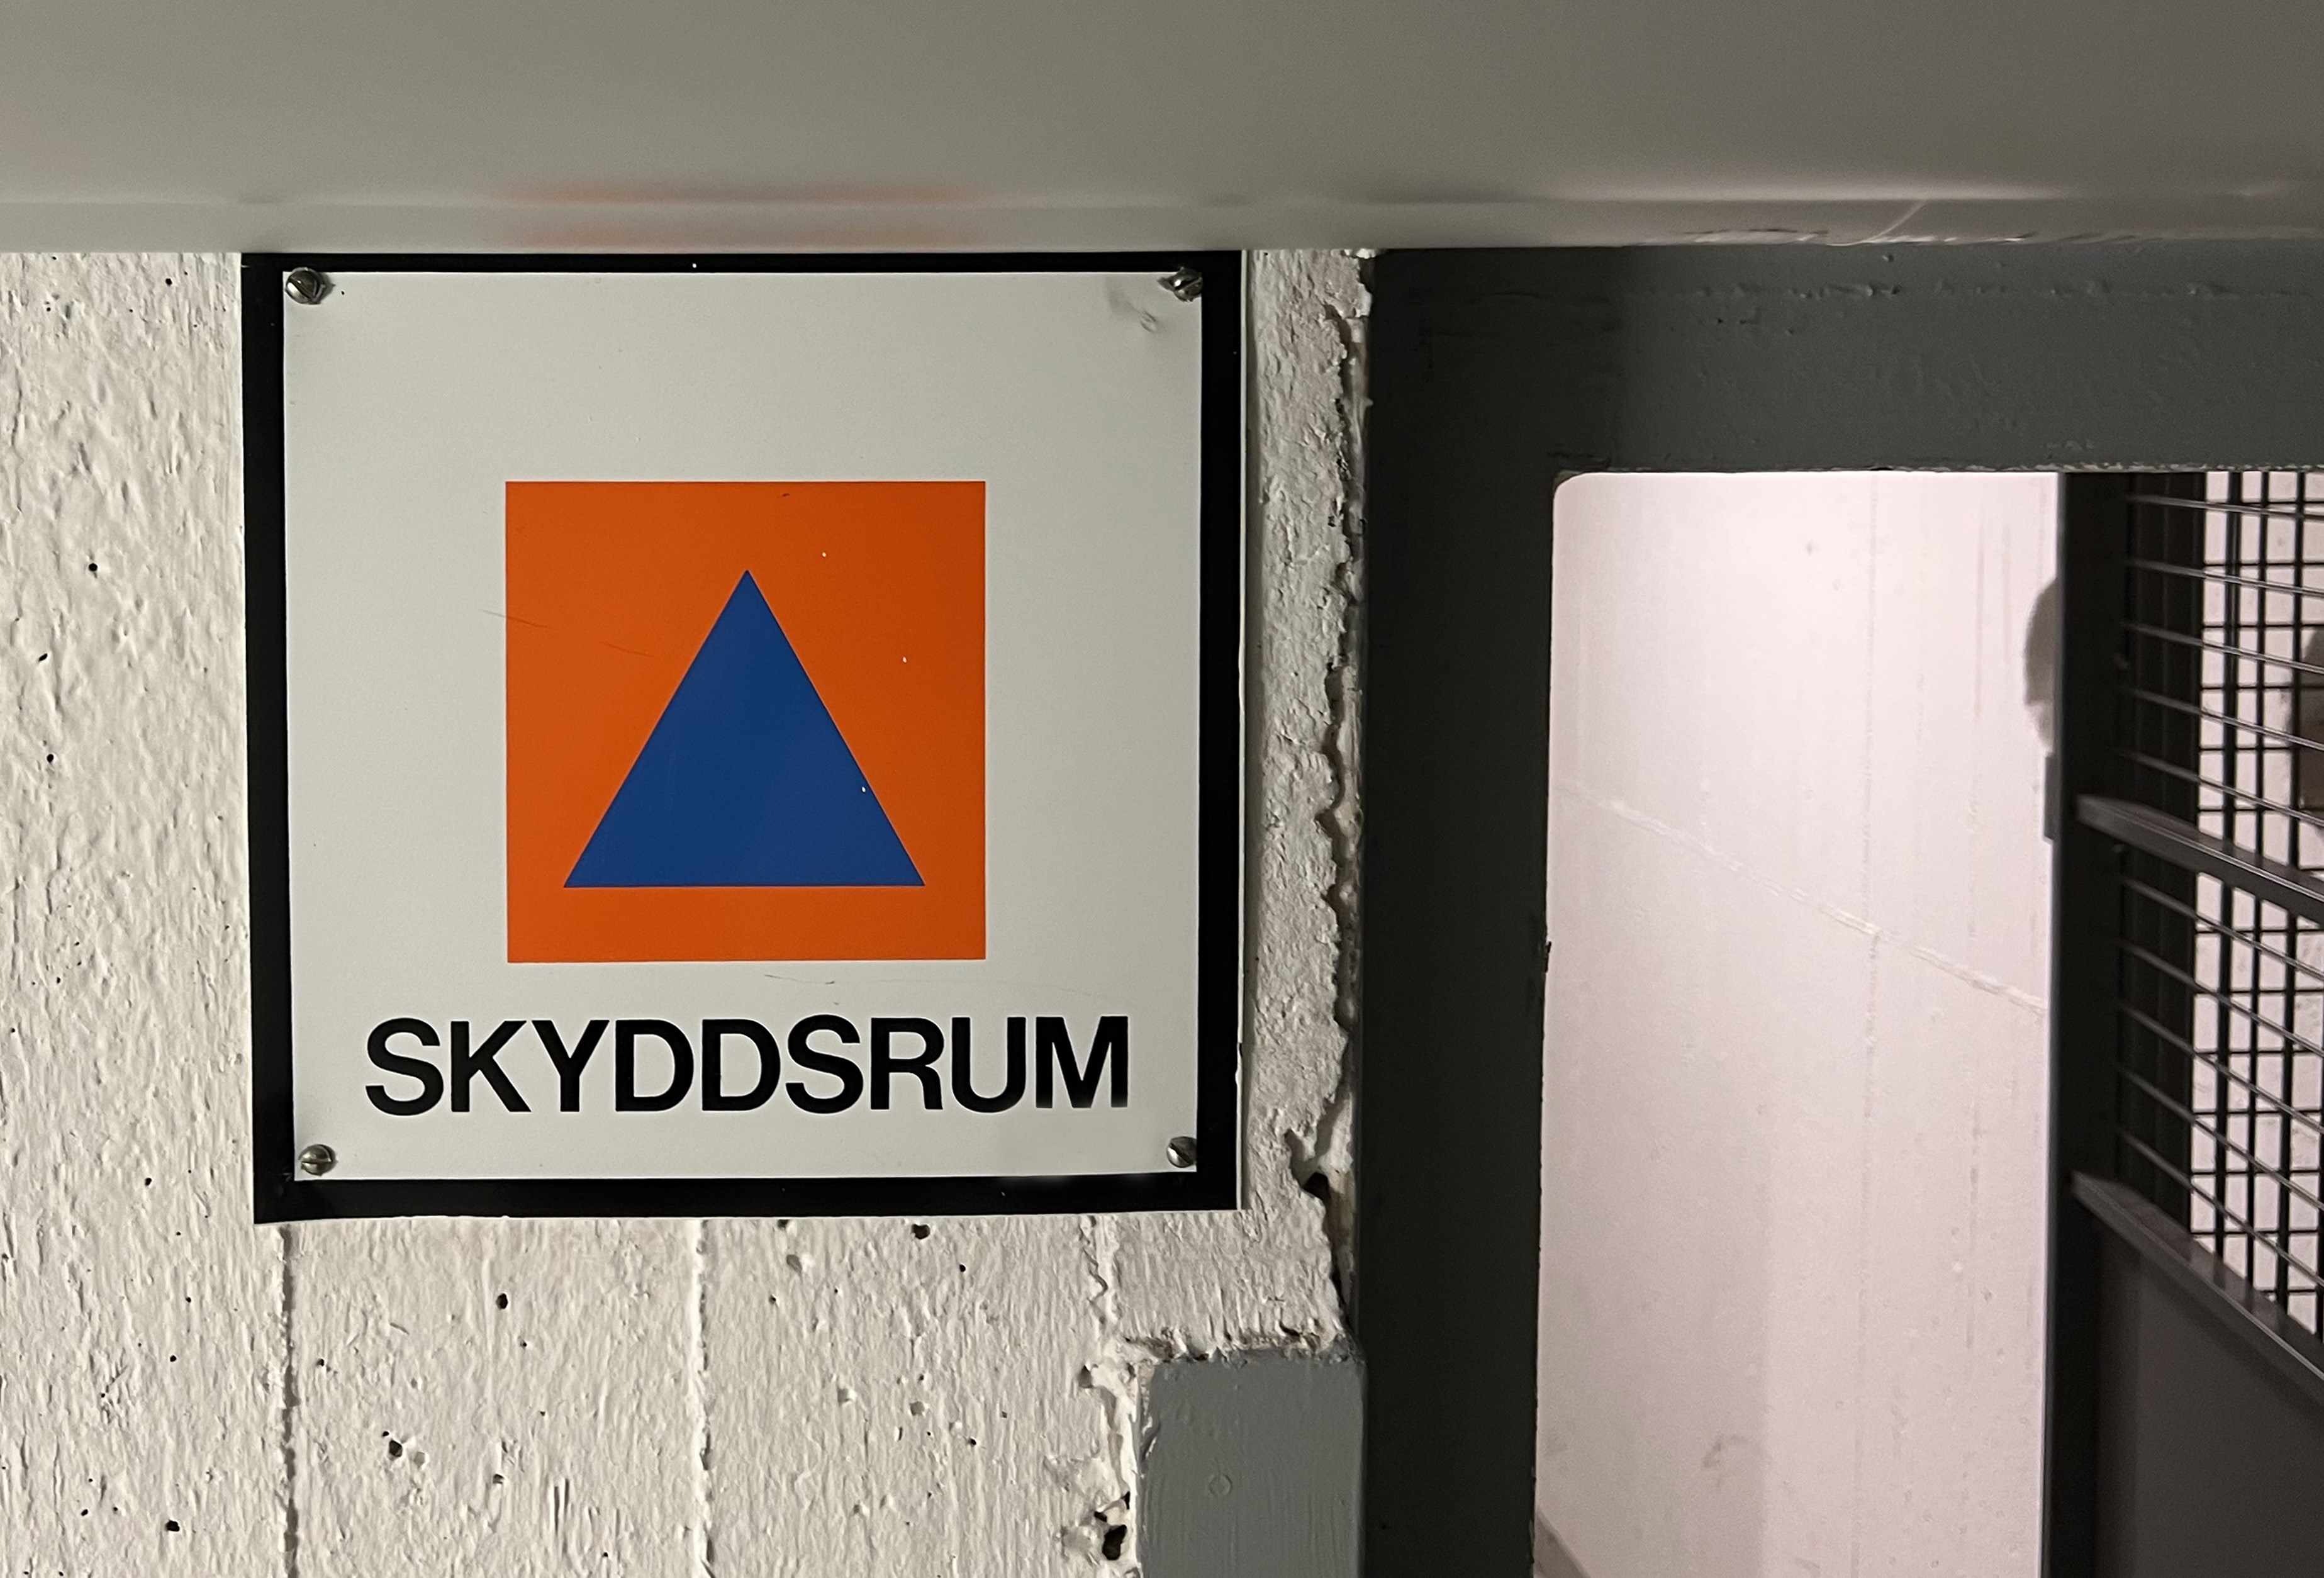 Skylt med ordet skyddsrum under en orange kvadrat med en blå triangel.